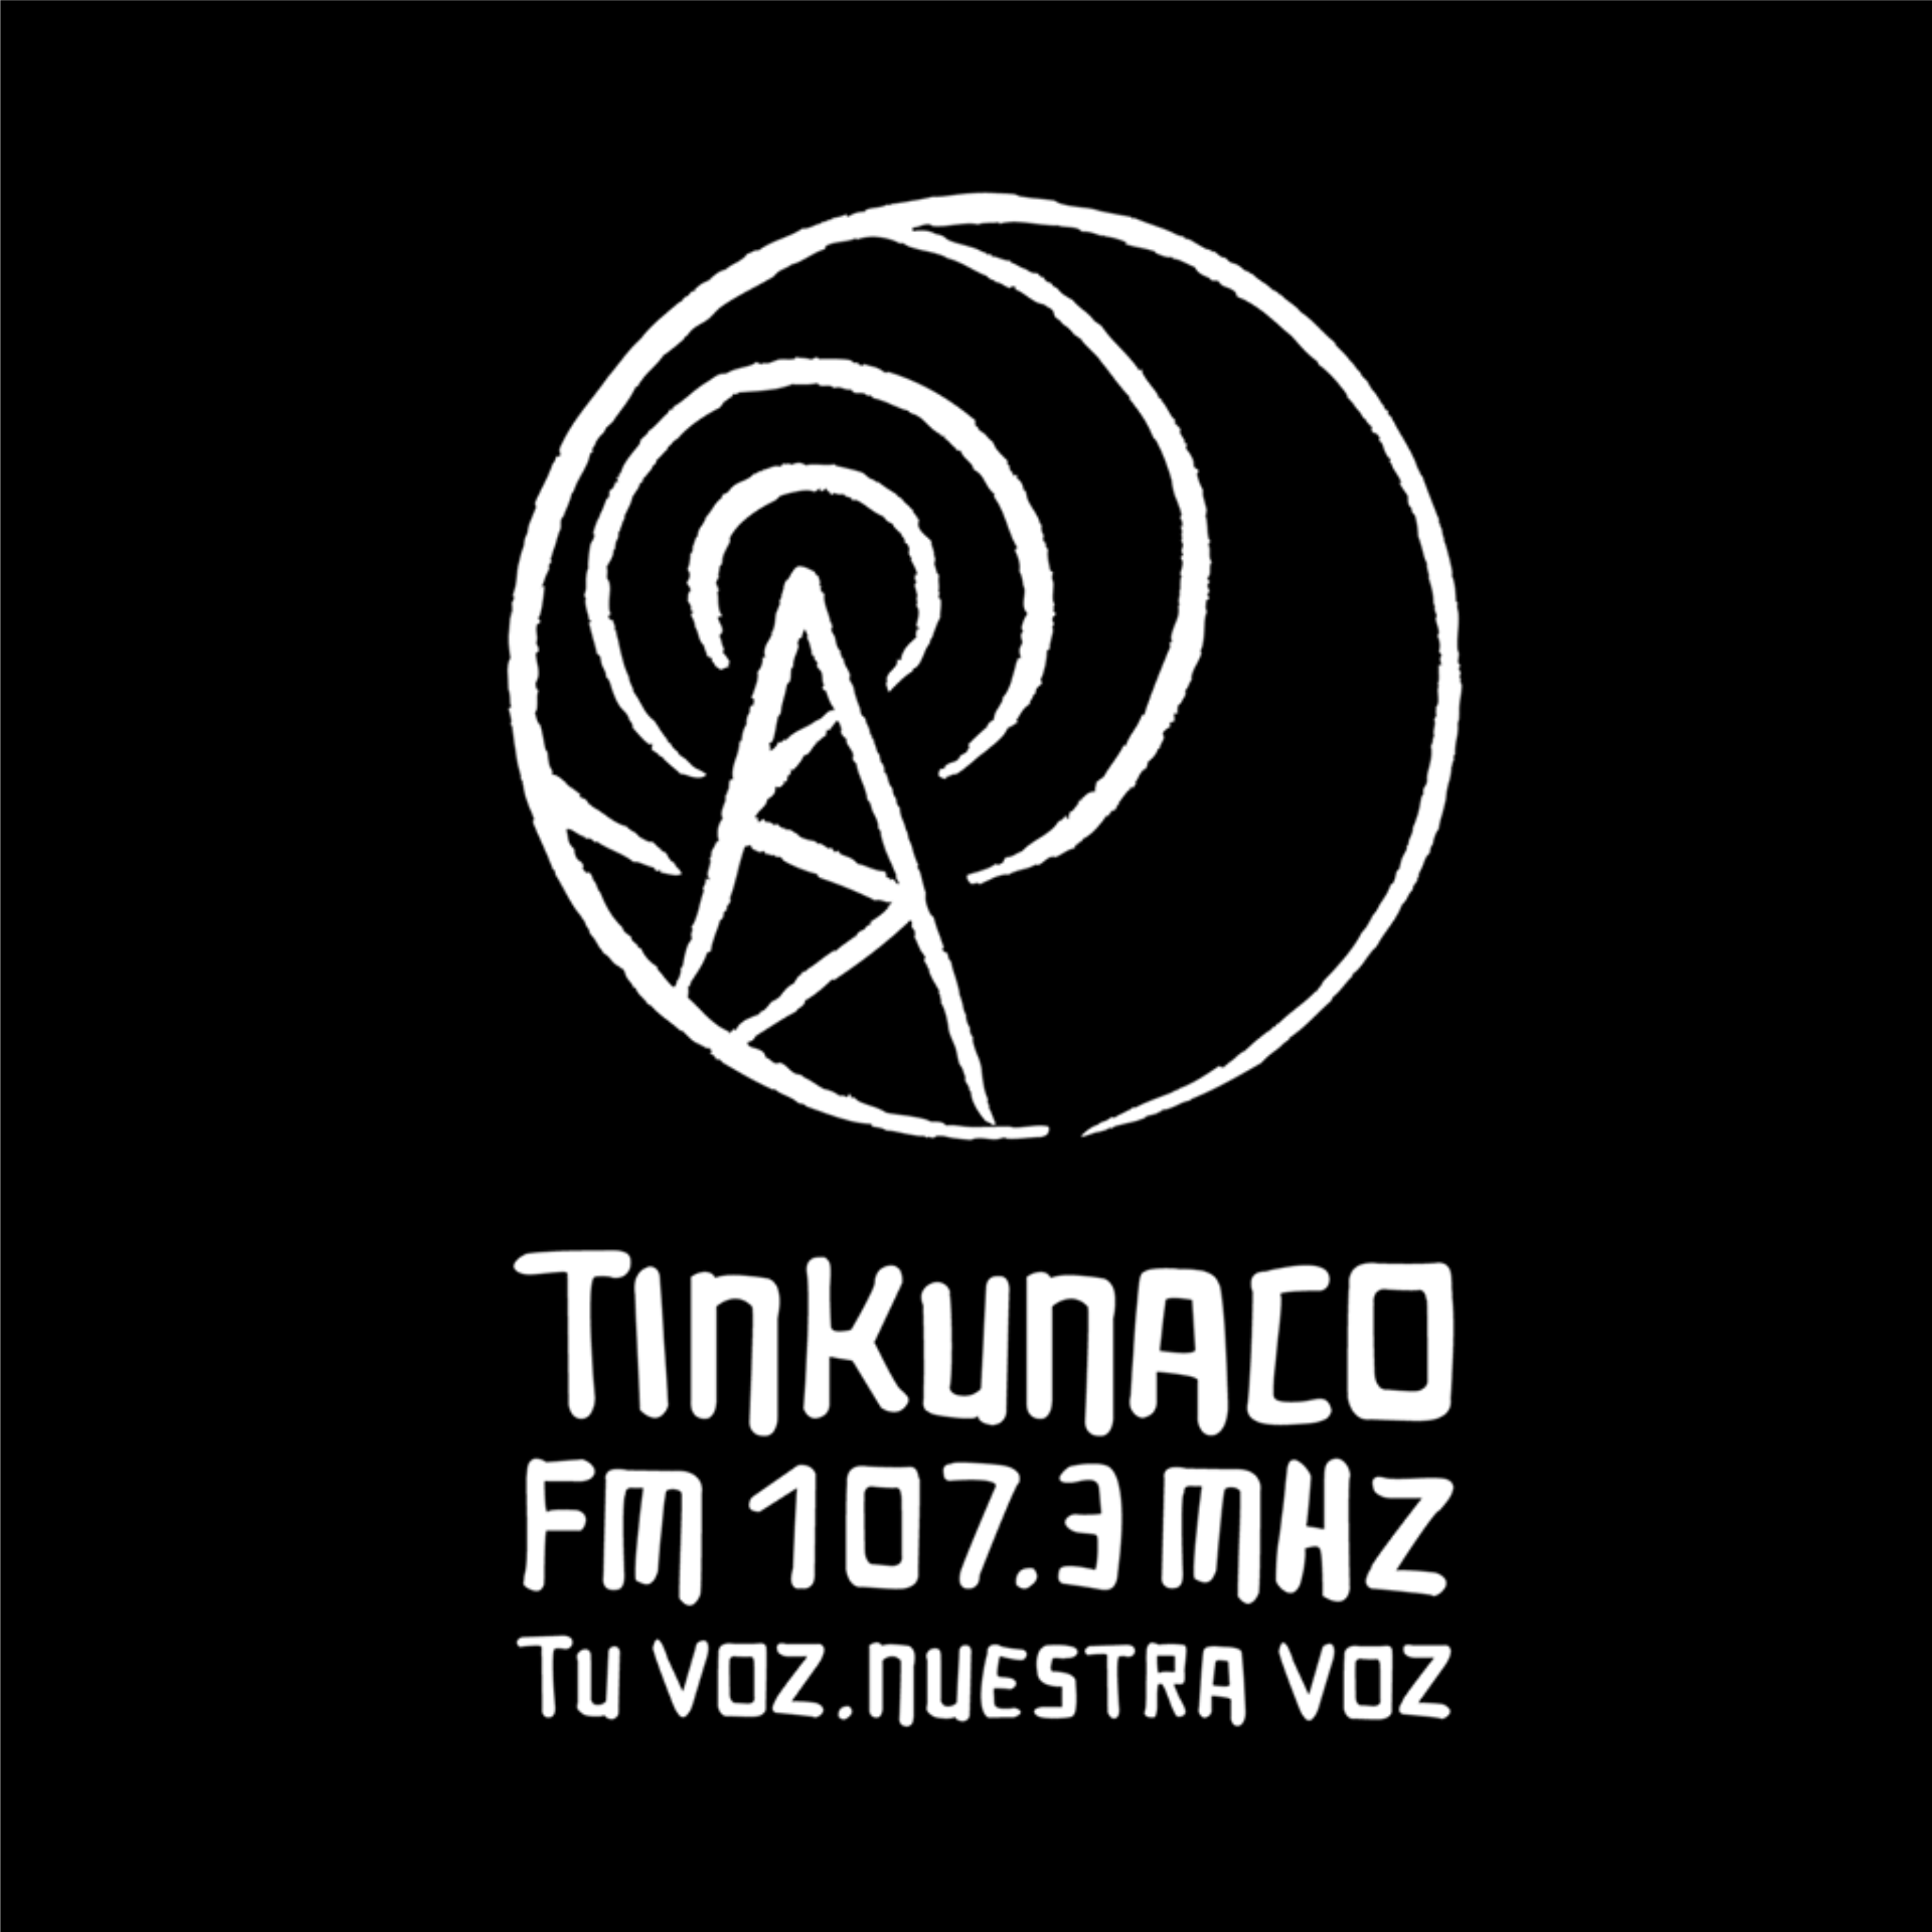 FM Tinkunaco